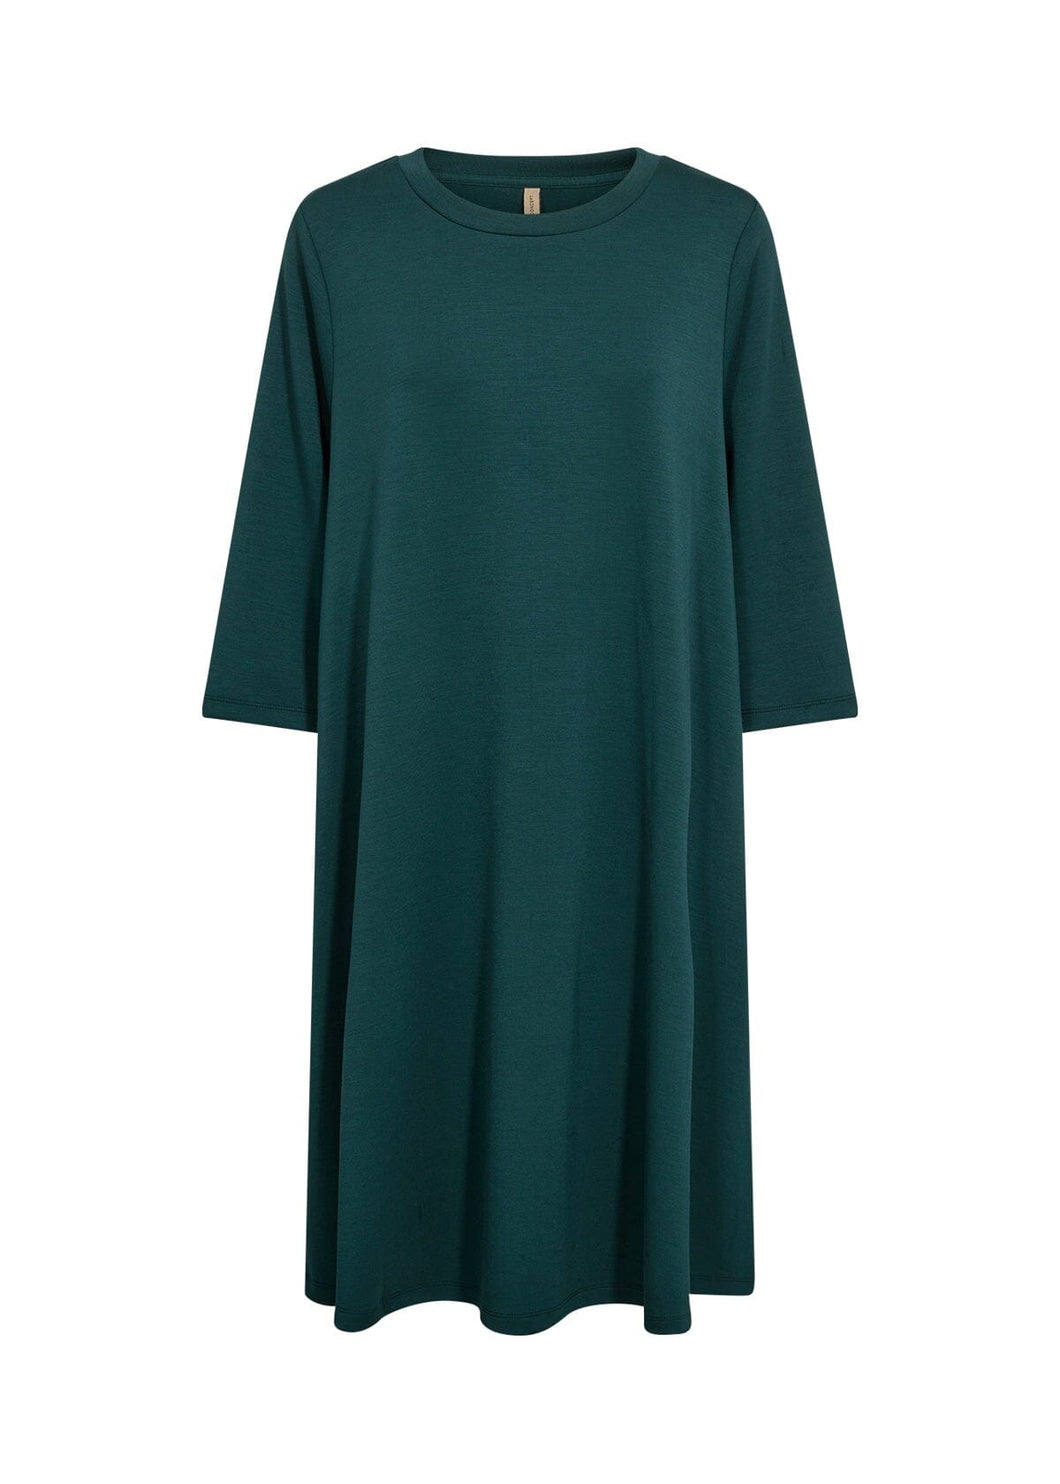 Banu Dress in Shady Green Dress Soyaconcept 